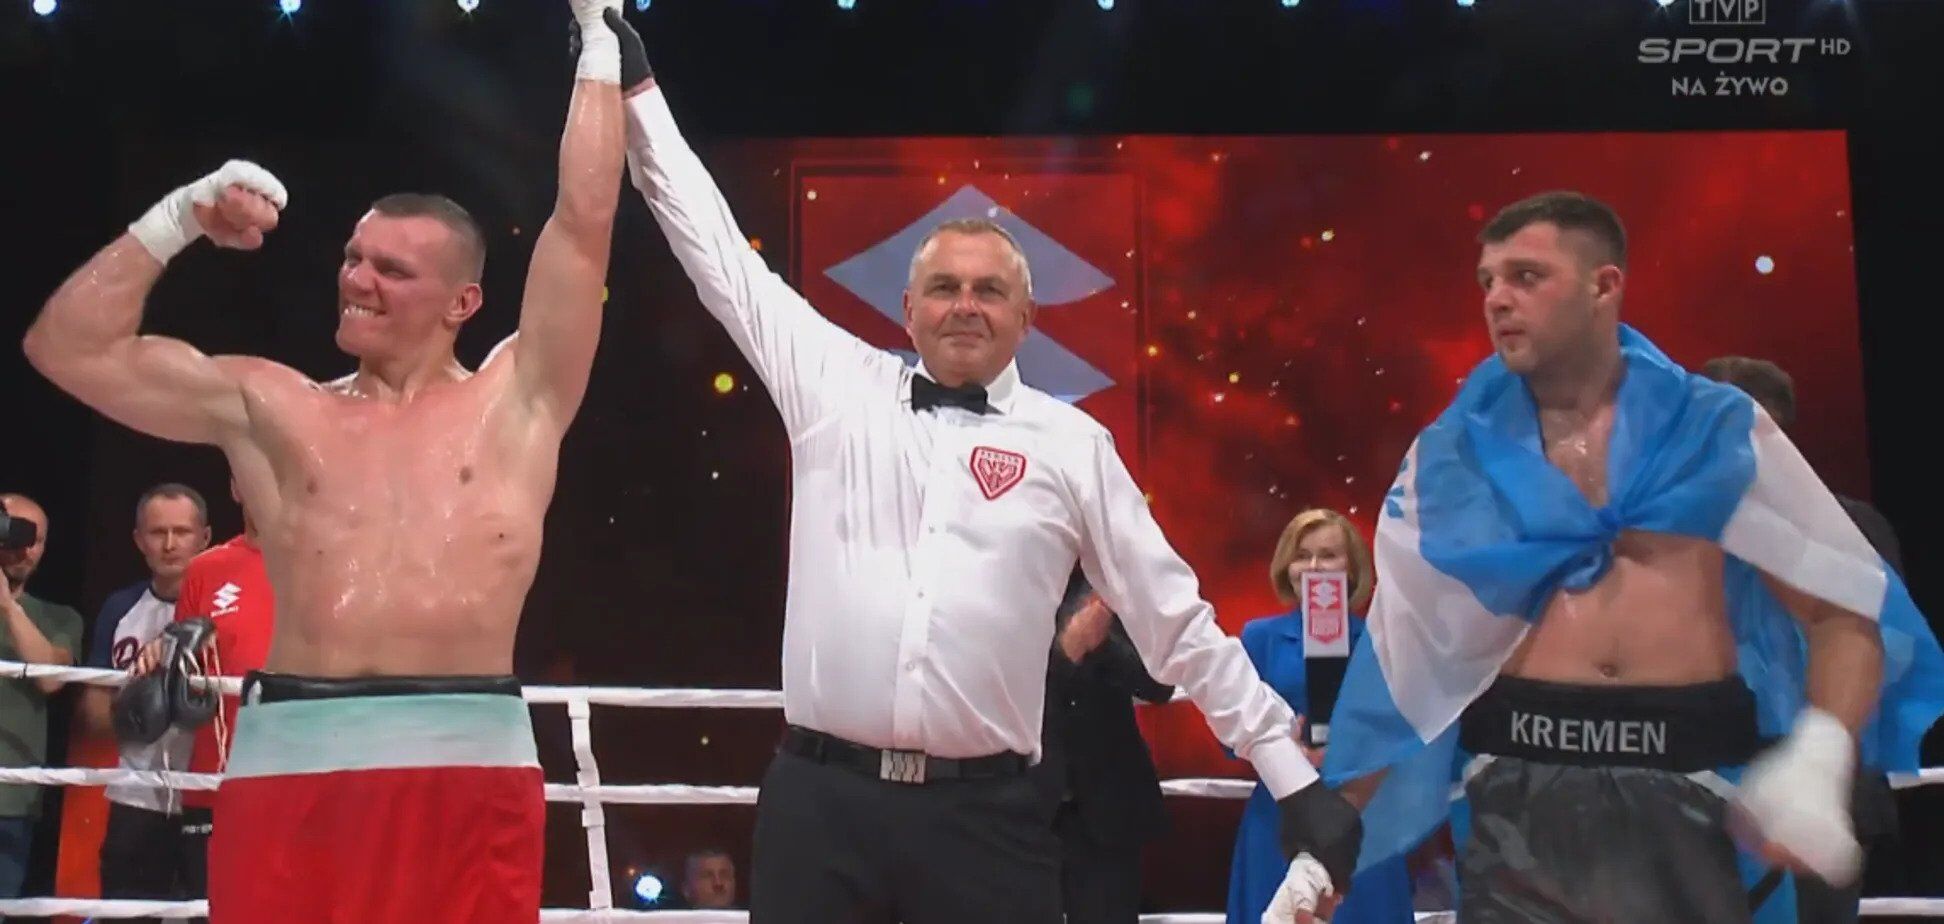 Famous Ukrainian heavyweight won two championship titles by knockout. Video